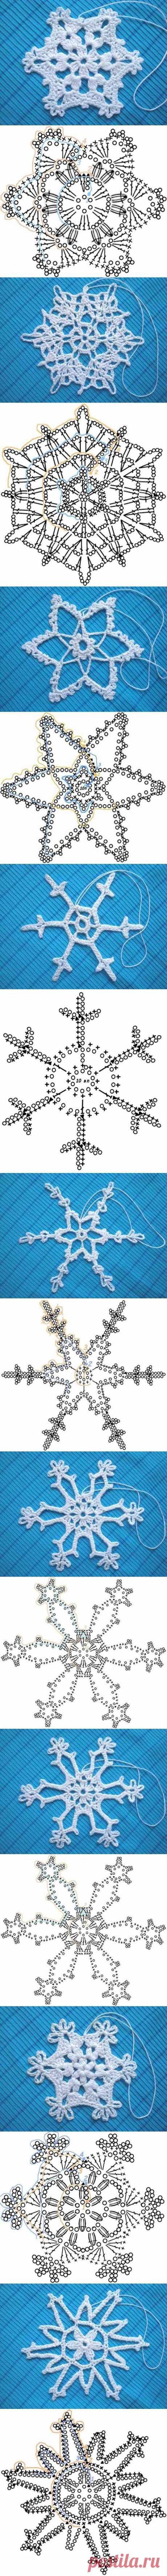 DIY Crochet Snowflakes Pattern DIY Projects | UsefulDIY.com